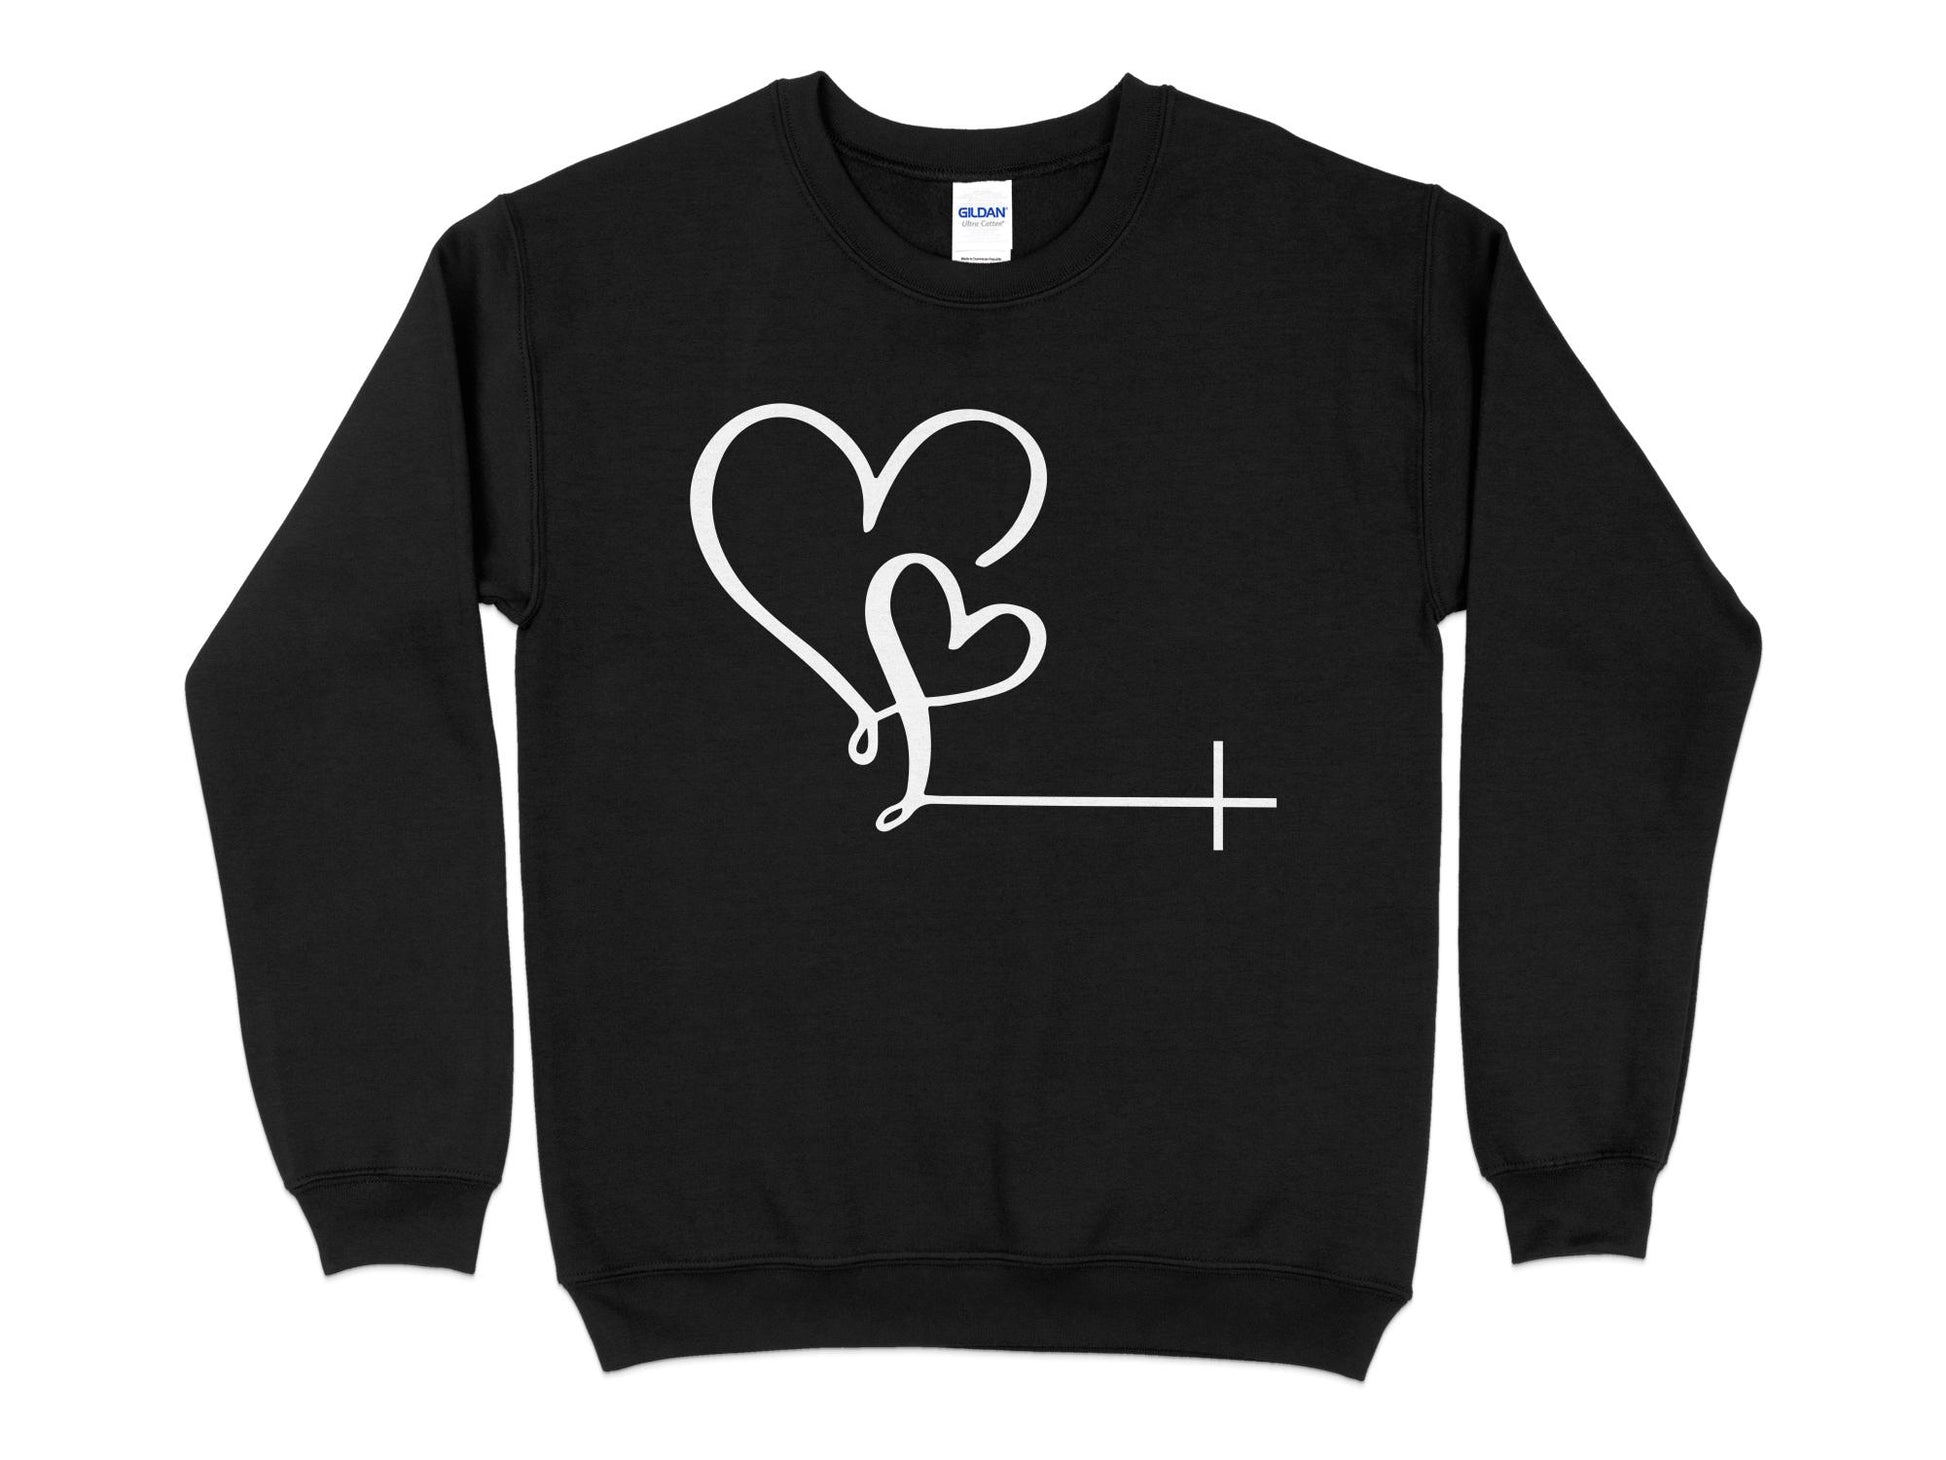 Unisex Love Heart Christian Sweatshirt, Casual Pullover,Gift for Him and Her, Cozy Apparel, Christian Faith Shirt - Mardonyx Sweatshirt S / Black